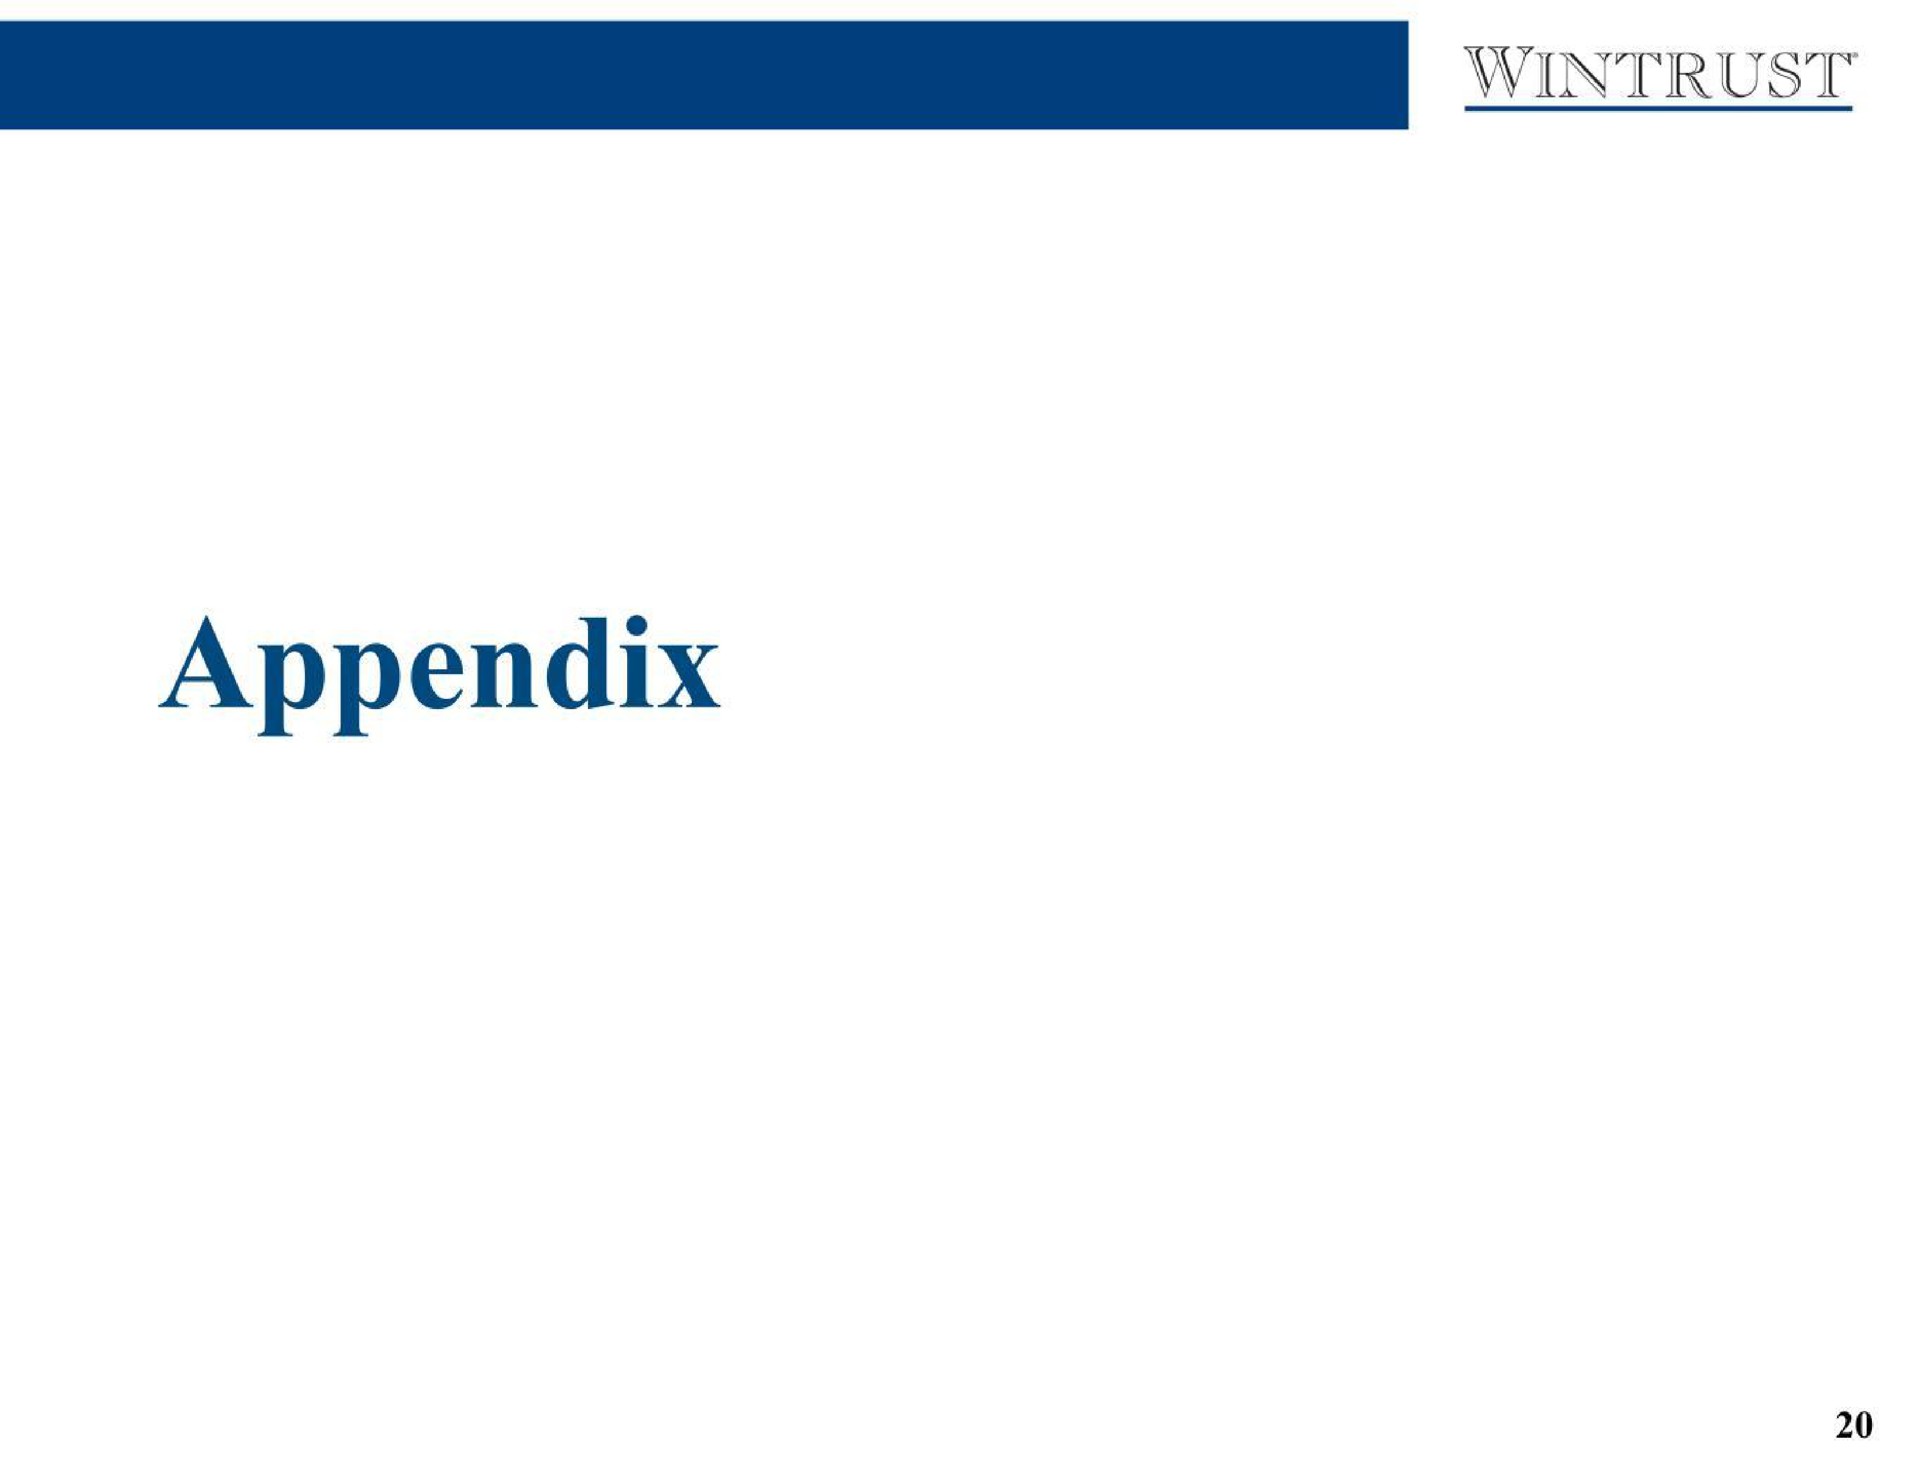 appendix | Wintrust Financial